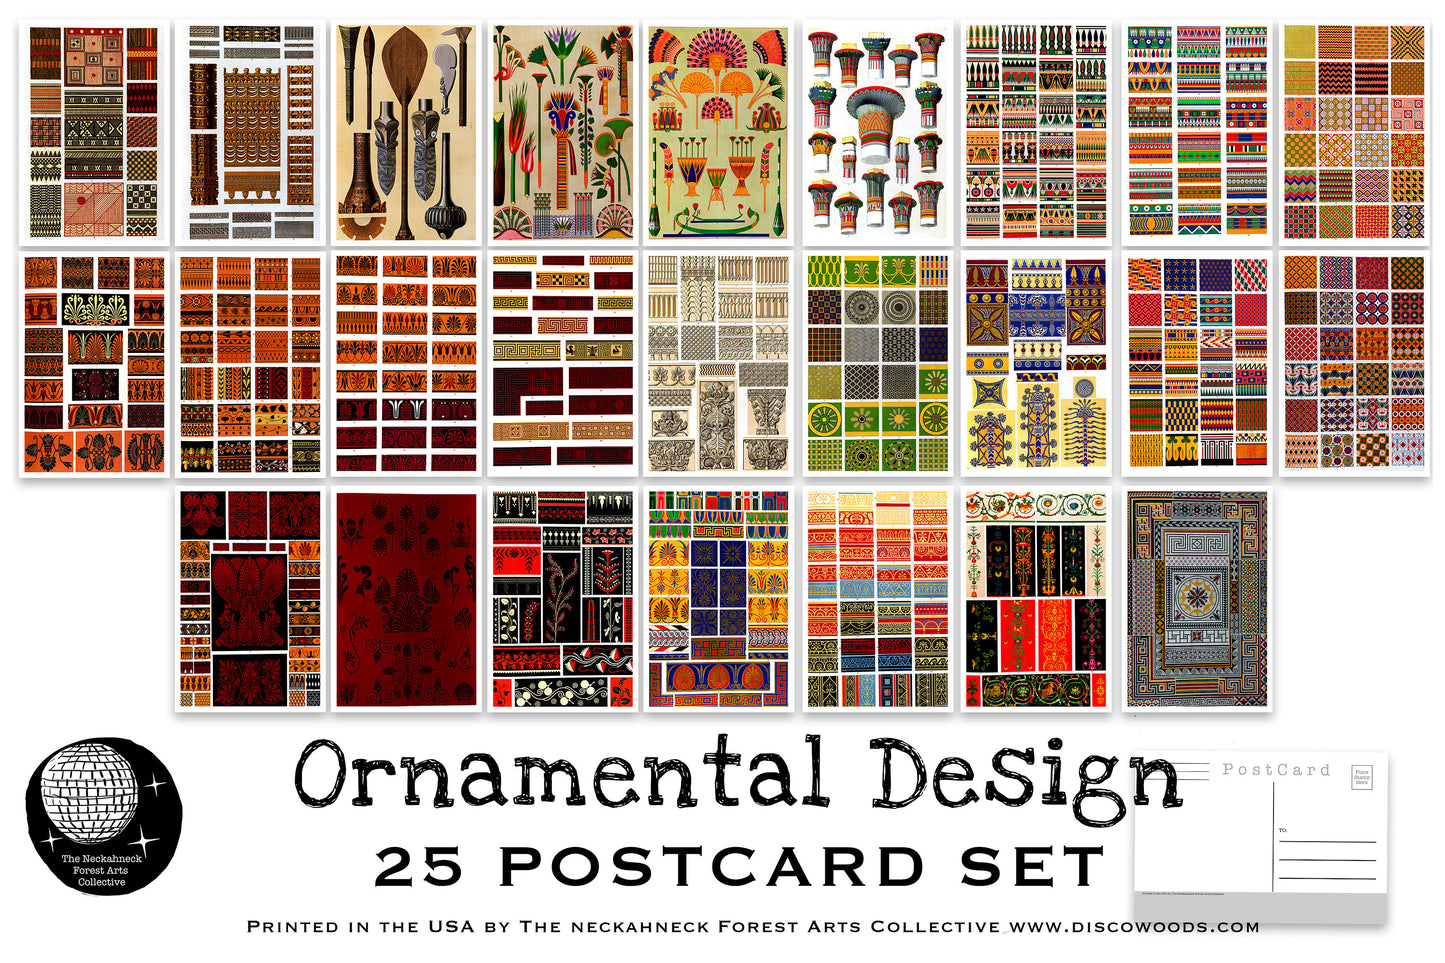 Ornimental Design Postcard Set - Set of 25 Artist Postcards - Ornamental patterns - Grammar of Ornament -Scrapbooking - Vintage - art deco